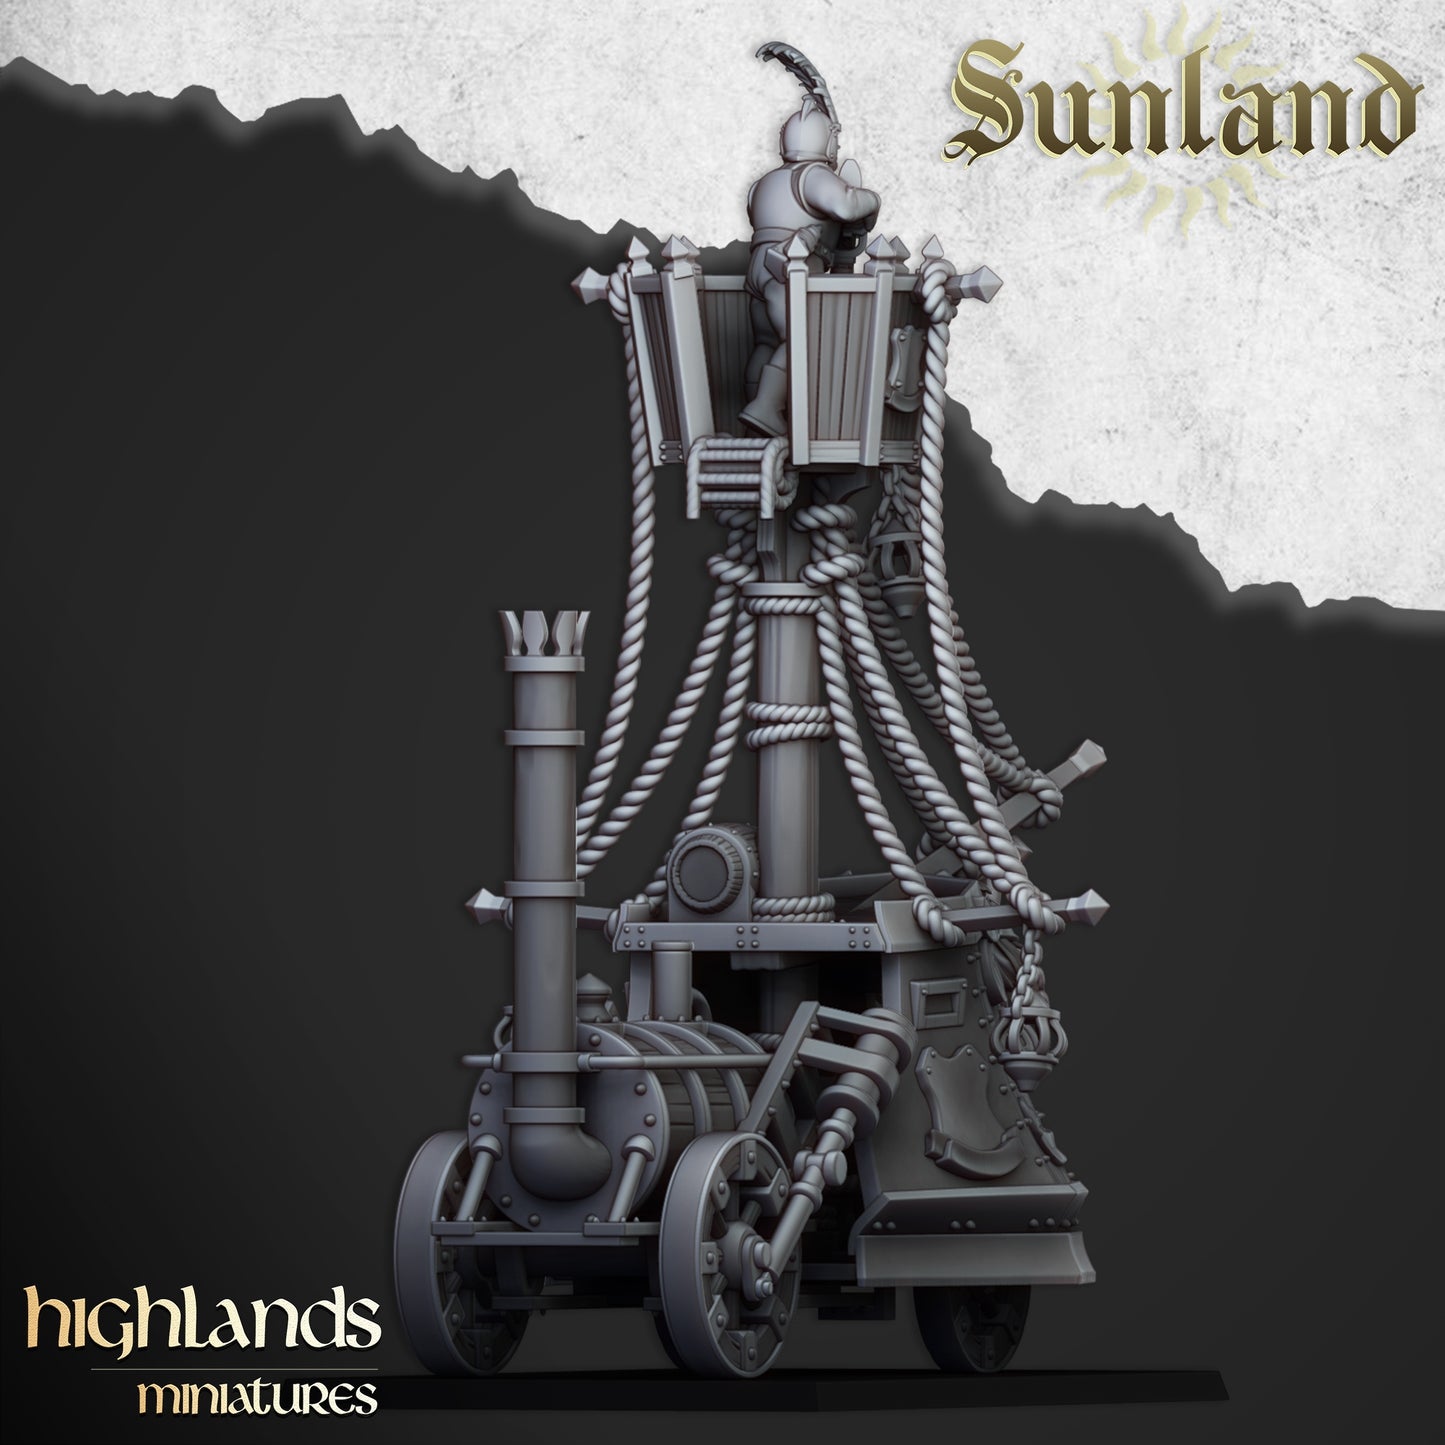 Sunland Ironclad Landship from Highlands Miniatures